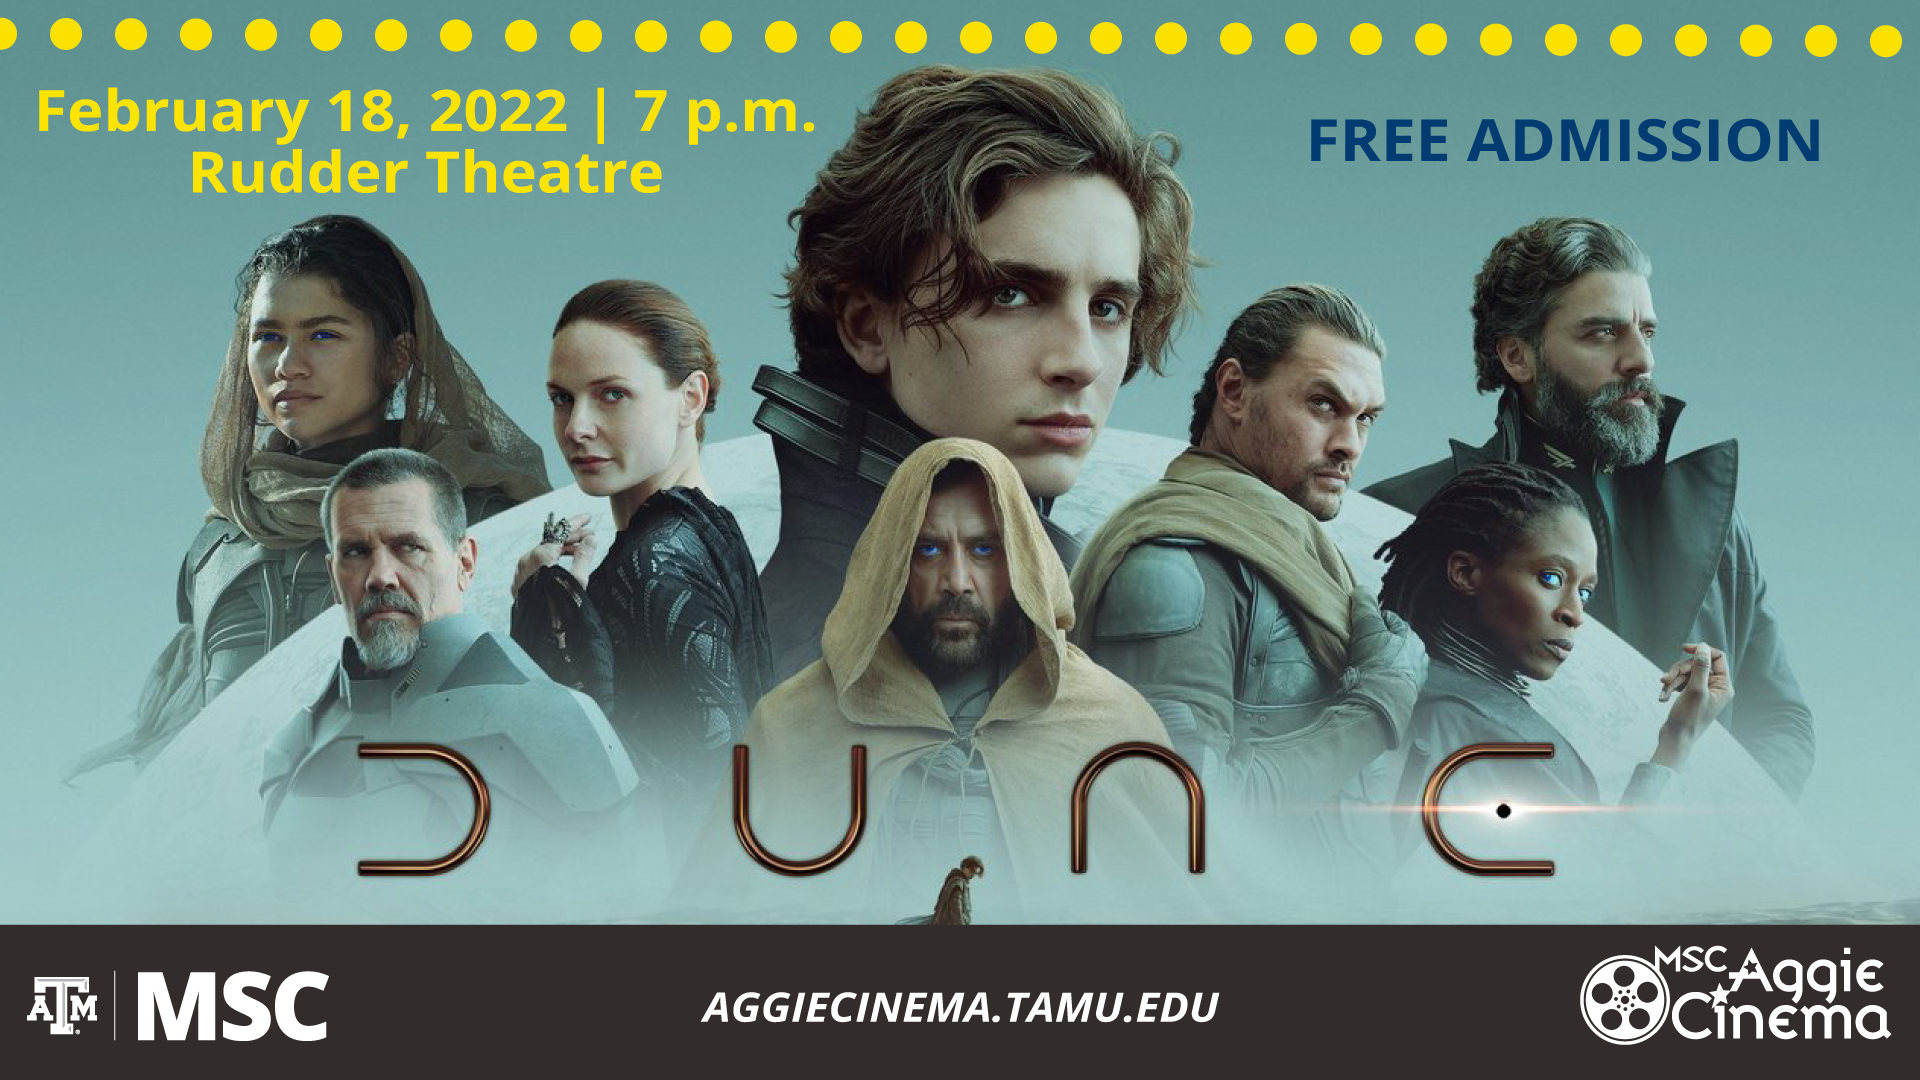 MSC Aggie Cinema Presents: Dune. February 18, 2022, 7 p.m. at Rudder Theatre. Free Admission. Website: aggiecinema.tamu.edu